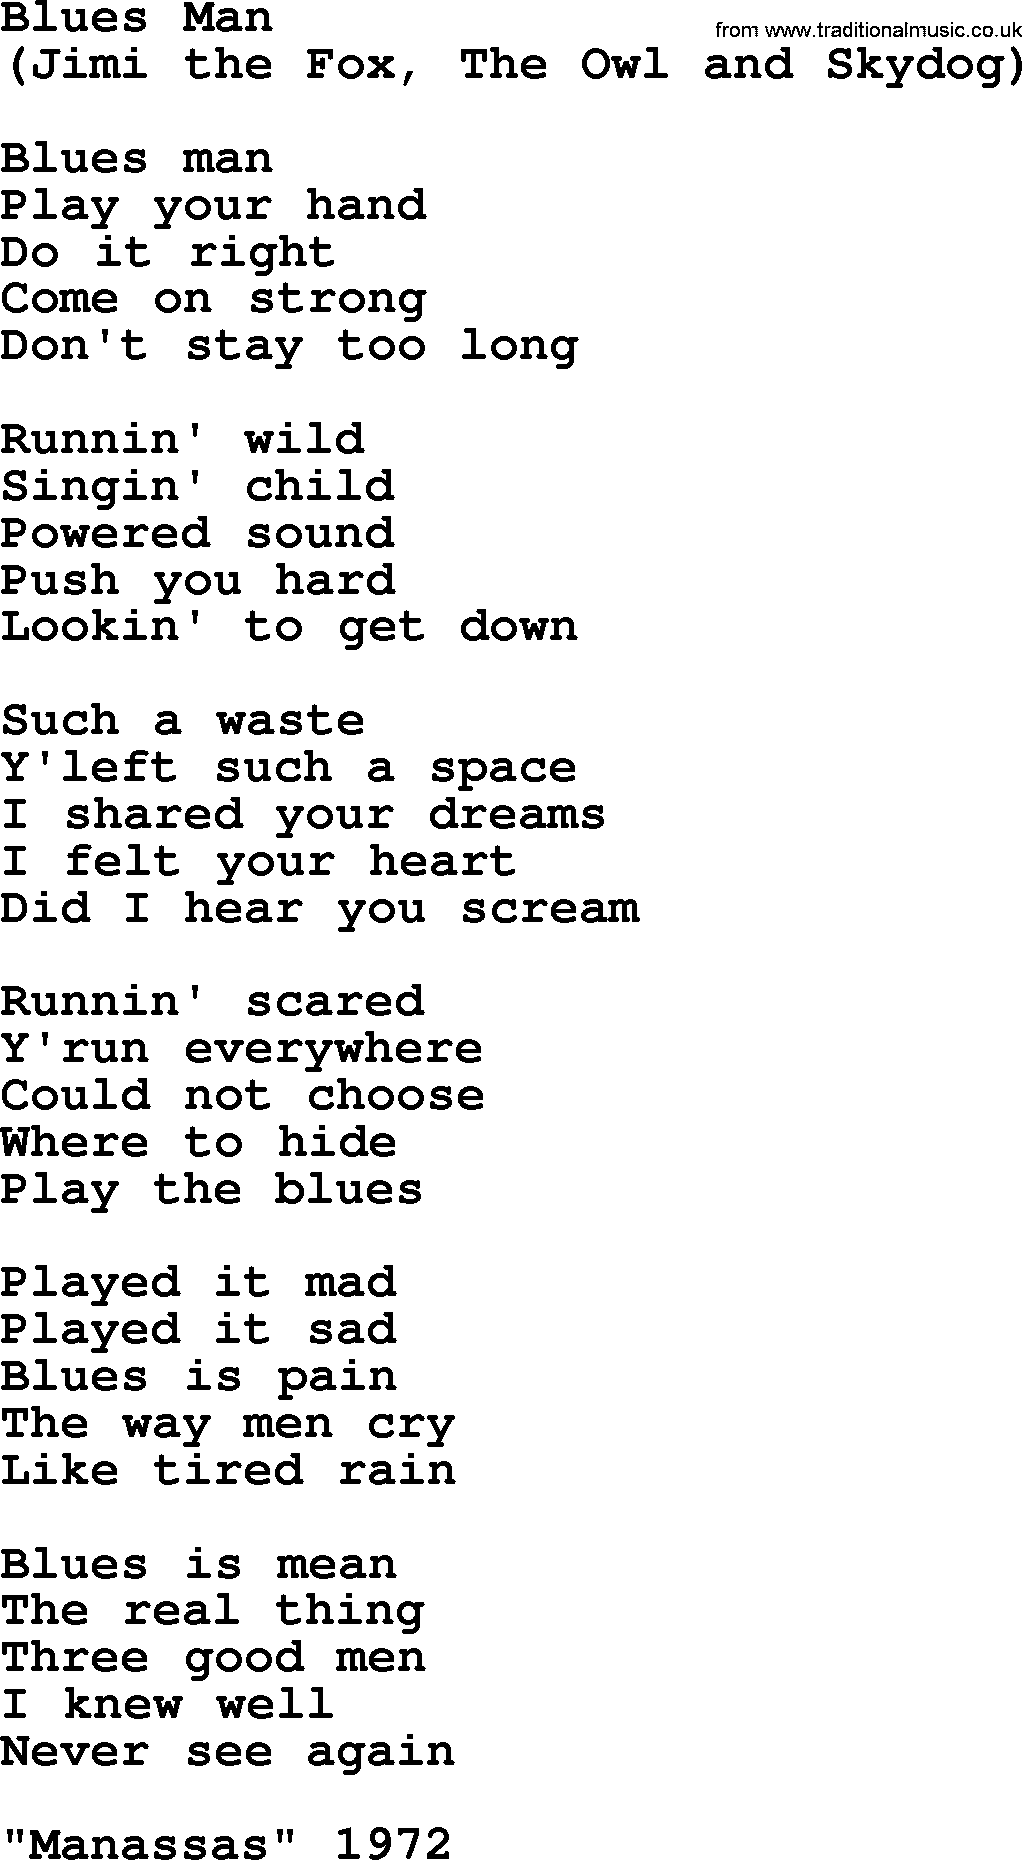 The Byrds song Blues Man, lyrics